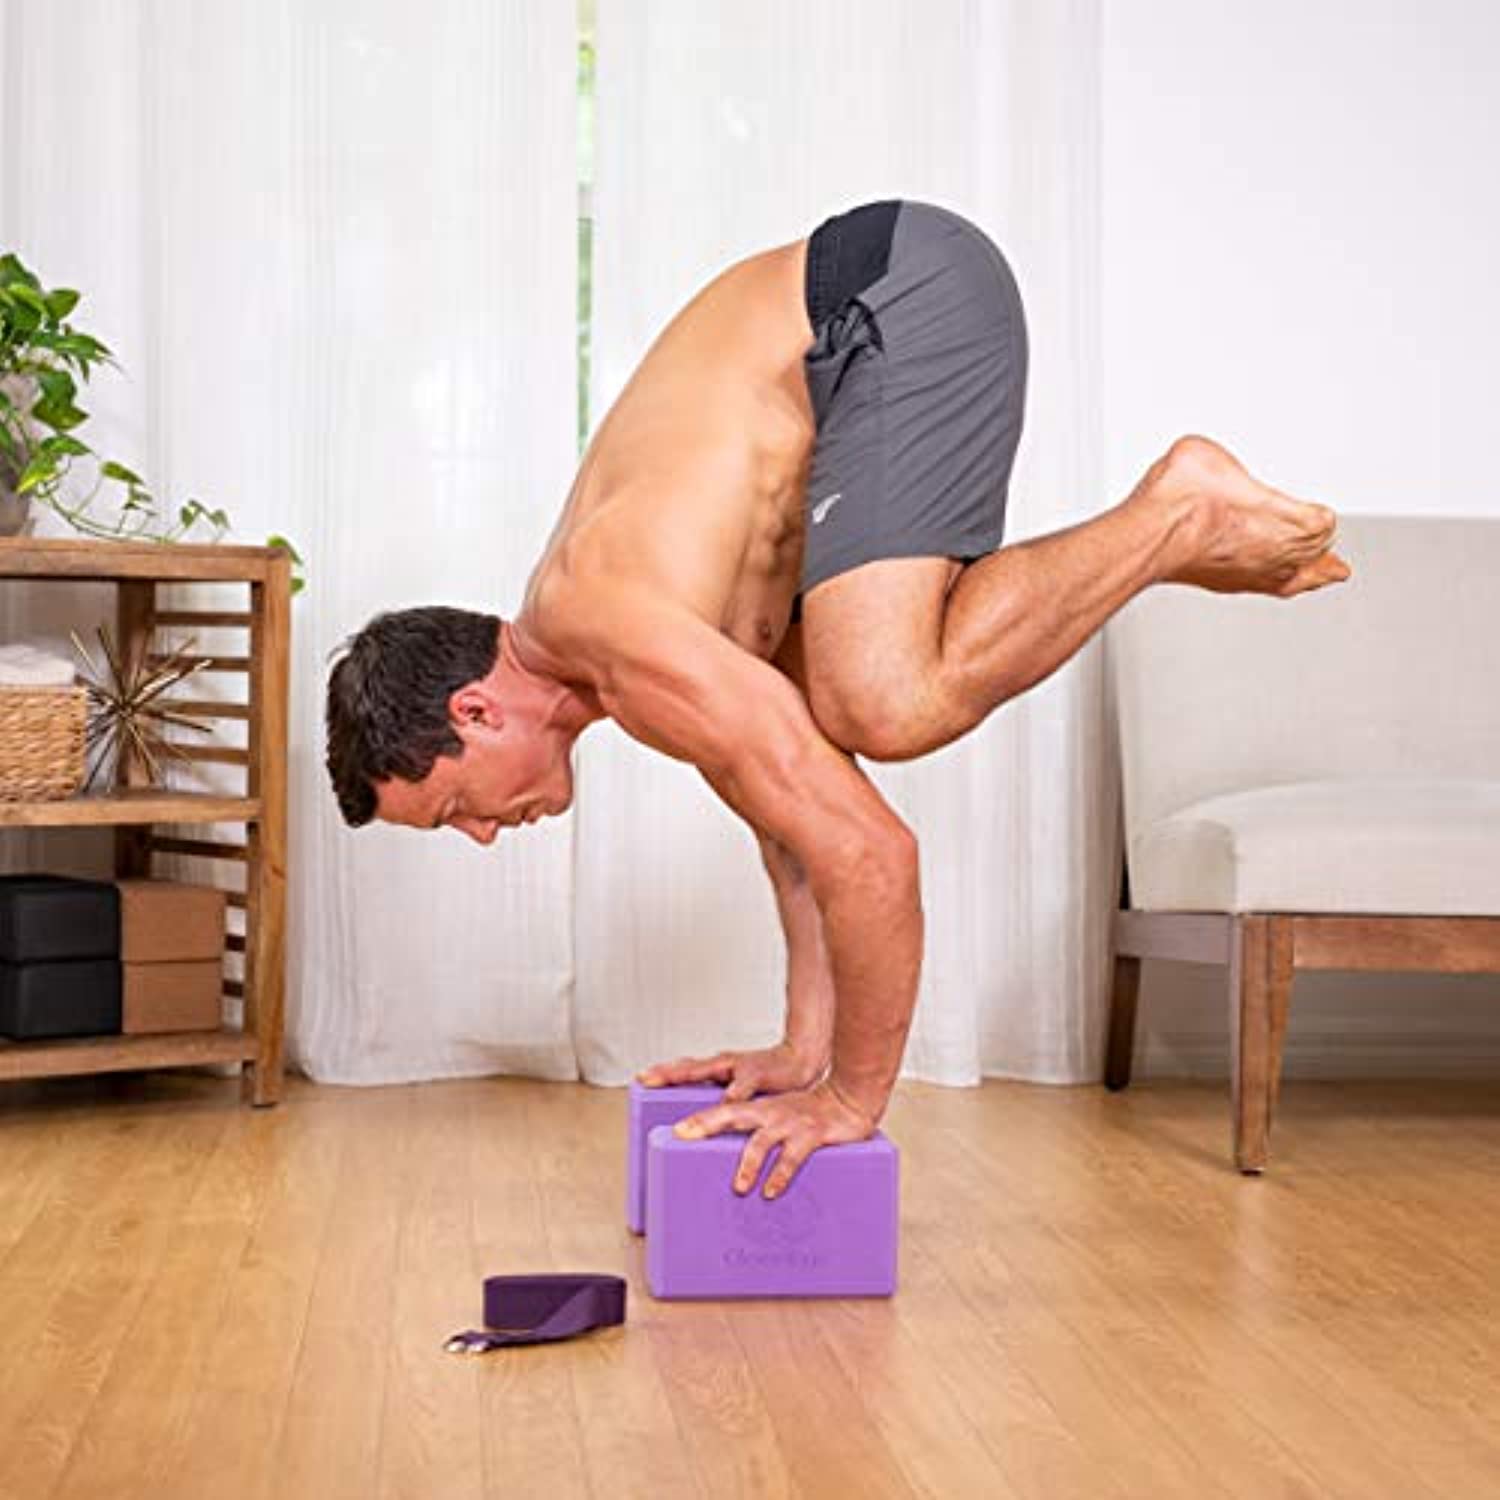 Yoga 101: ¿Qué tipos de bloques de yoga existen?